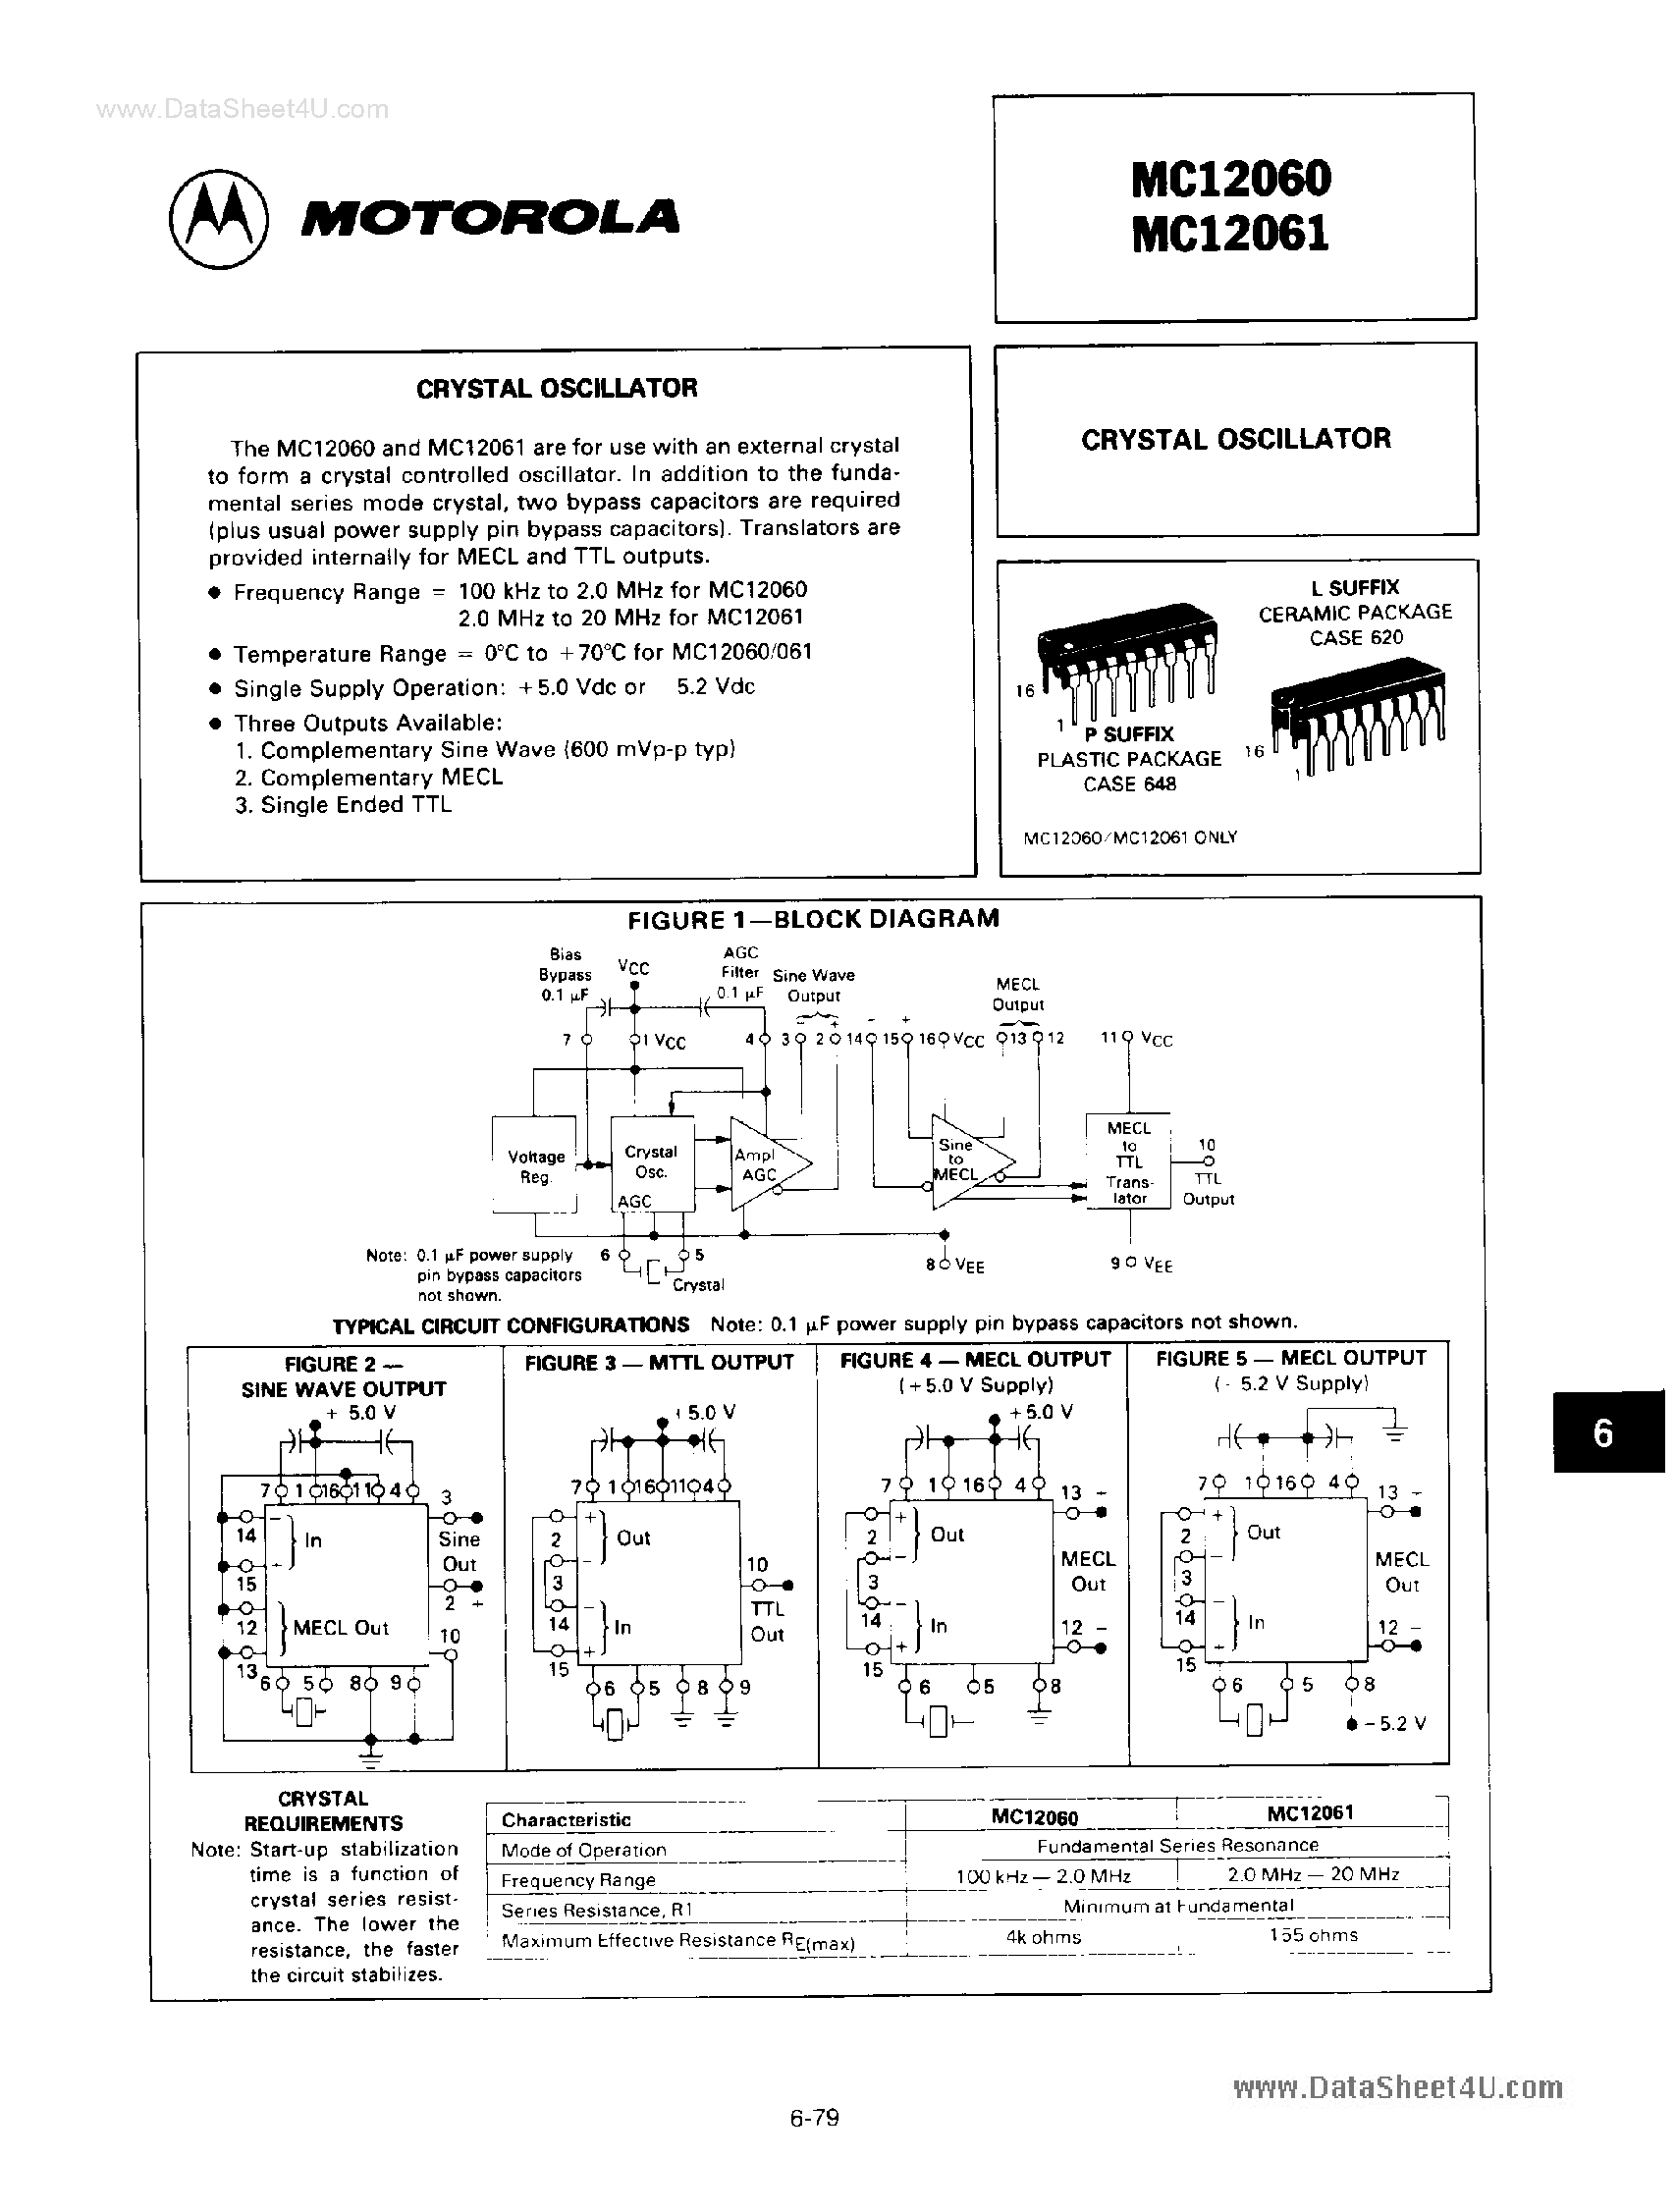 Даташит MC12060 - (MC12060 / MC12061) Crystal Oscillator страница 1